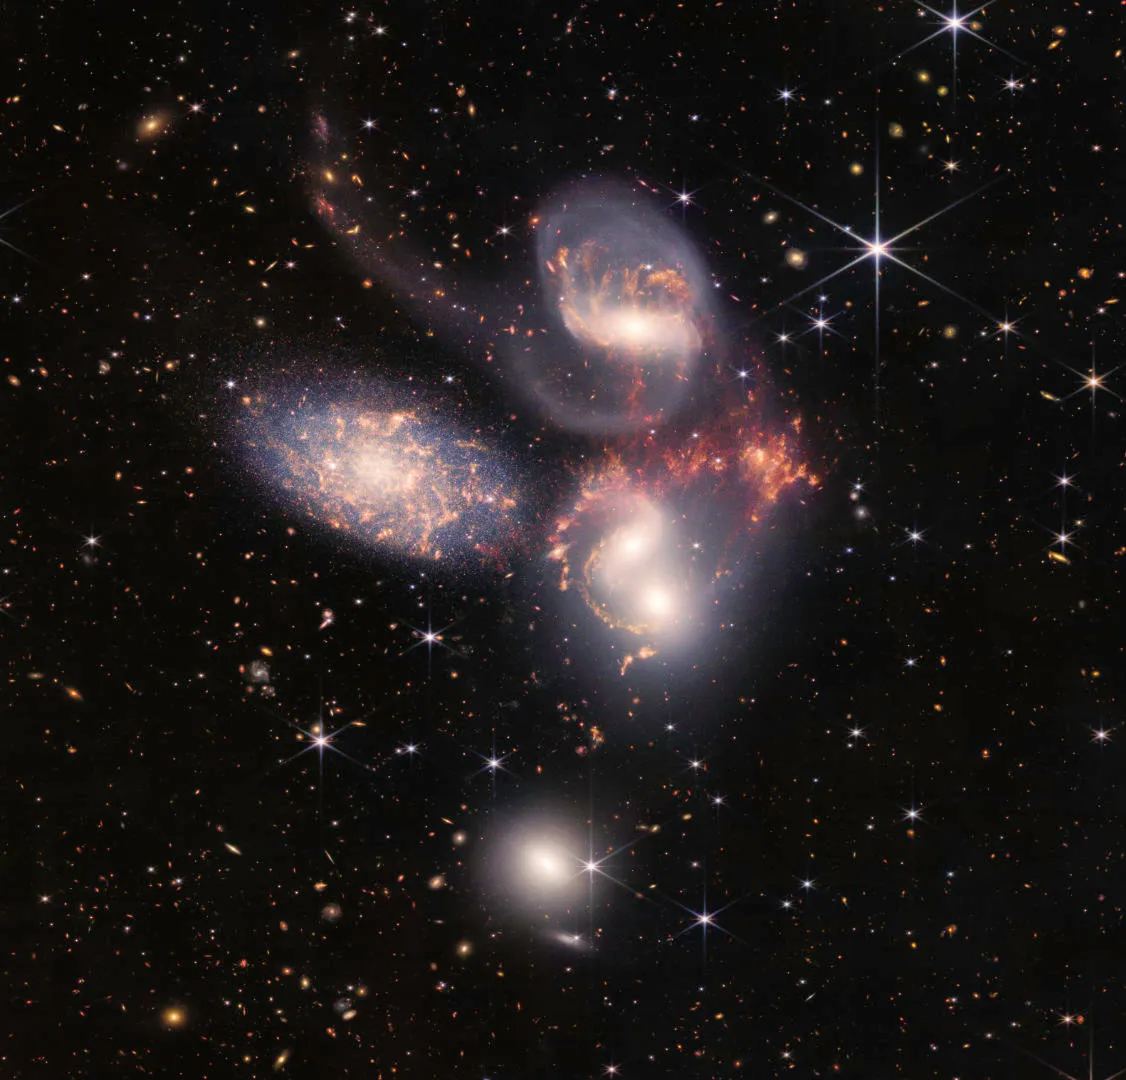 Stephan’s Quintet, James Webb Space Telescope, July 2022 Credit: NASA, ESA, CSA, STScI